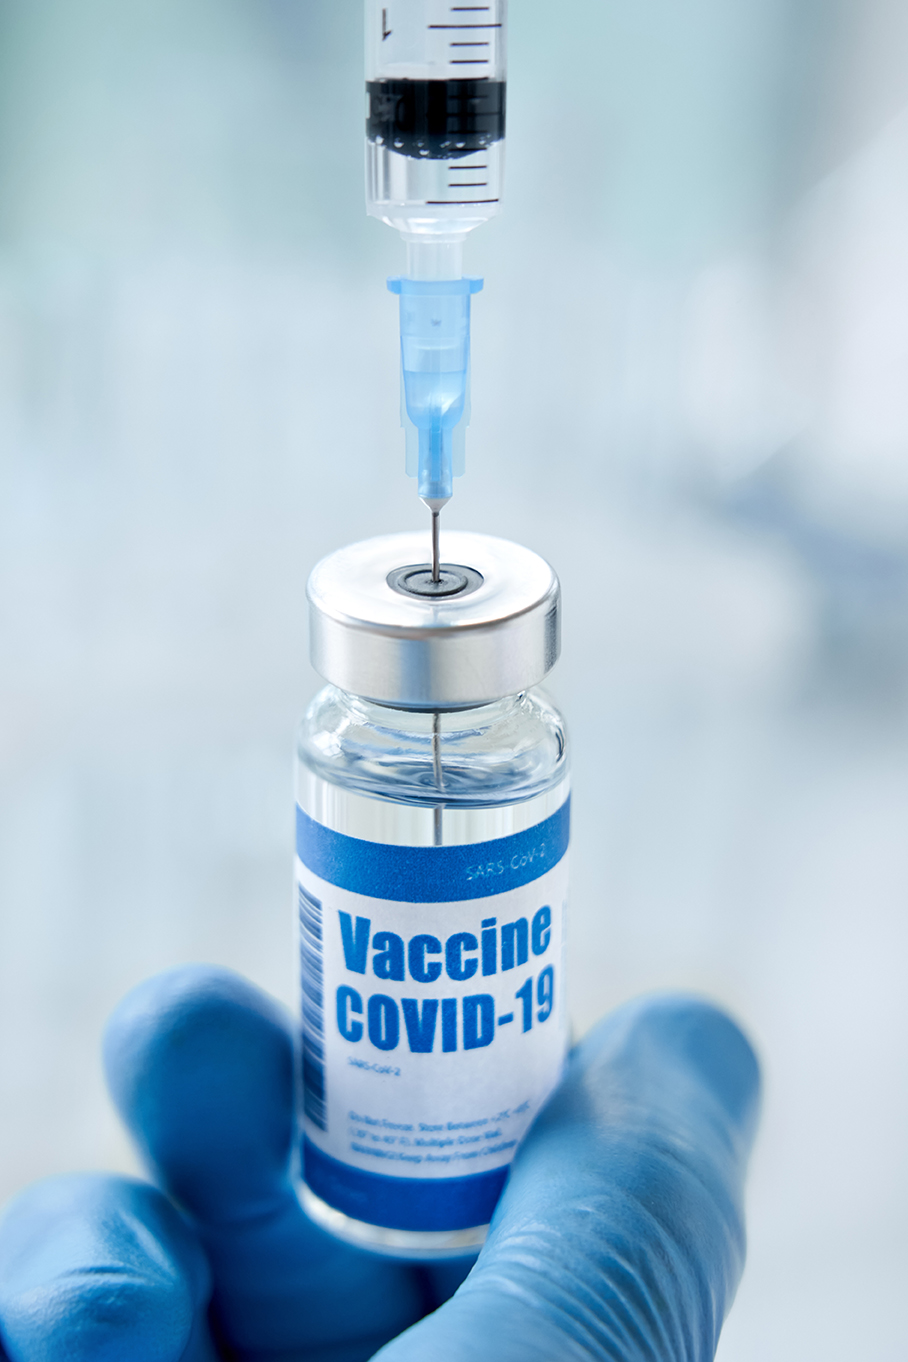 vaccine medication bottle syringe